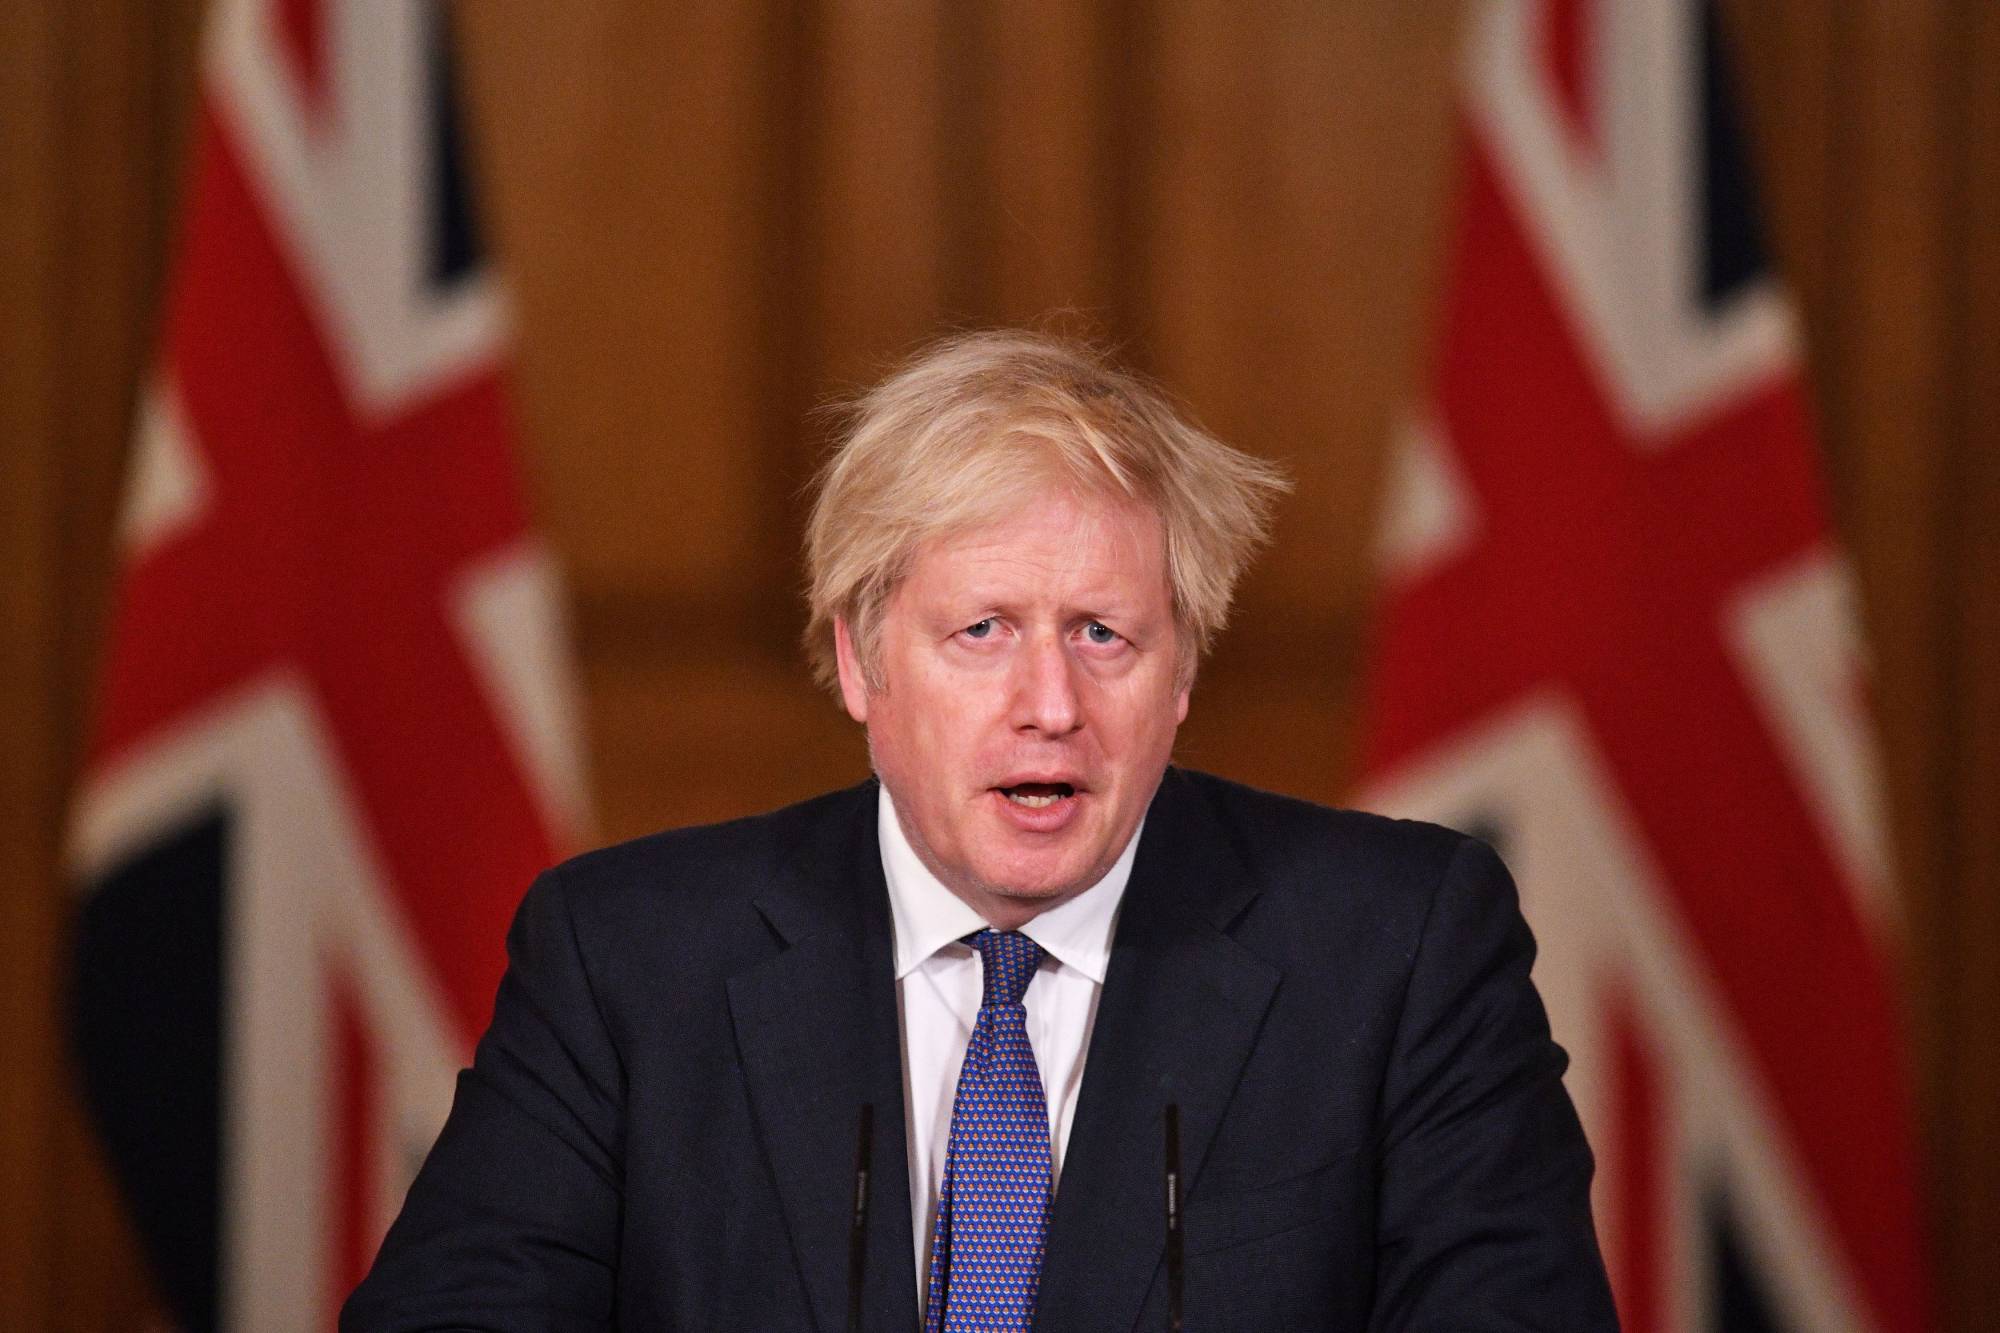 British Prime Minister Boris Johnson | PA WIRE / POOL / VIA REUTERS